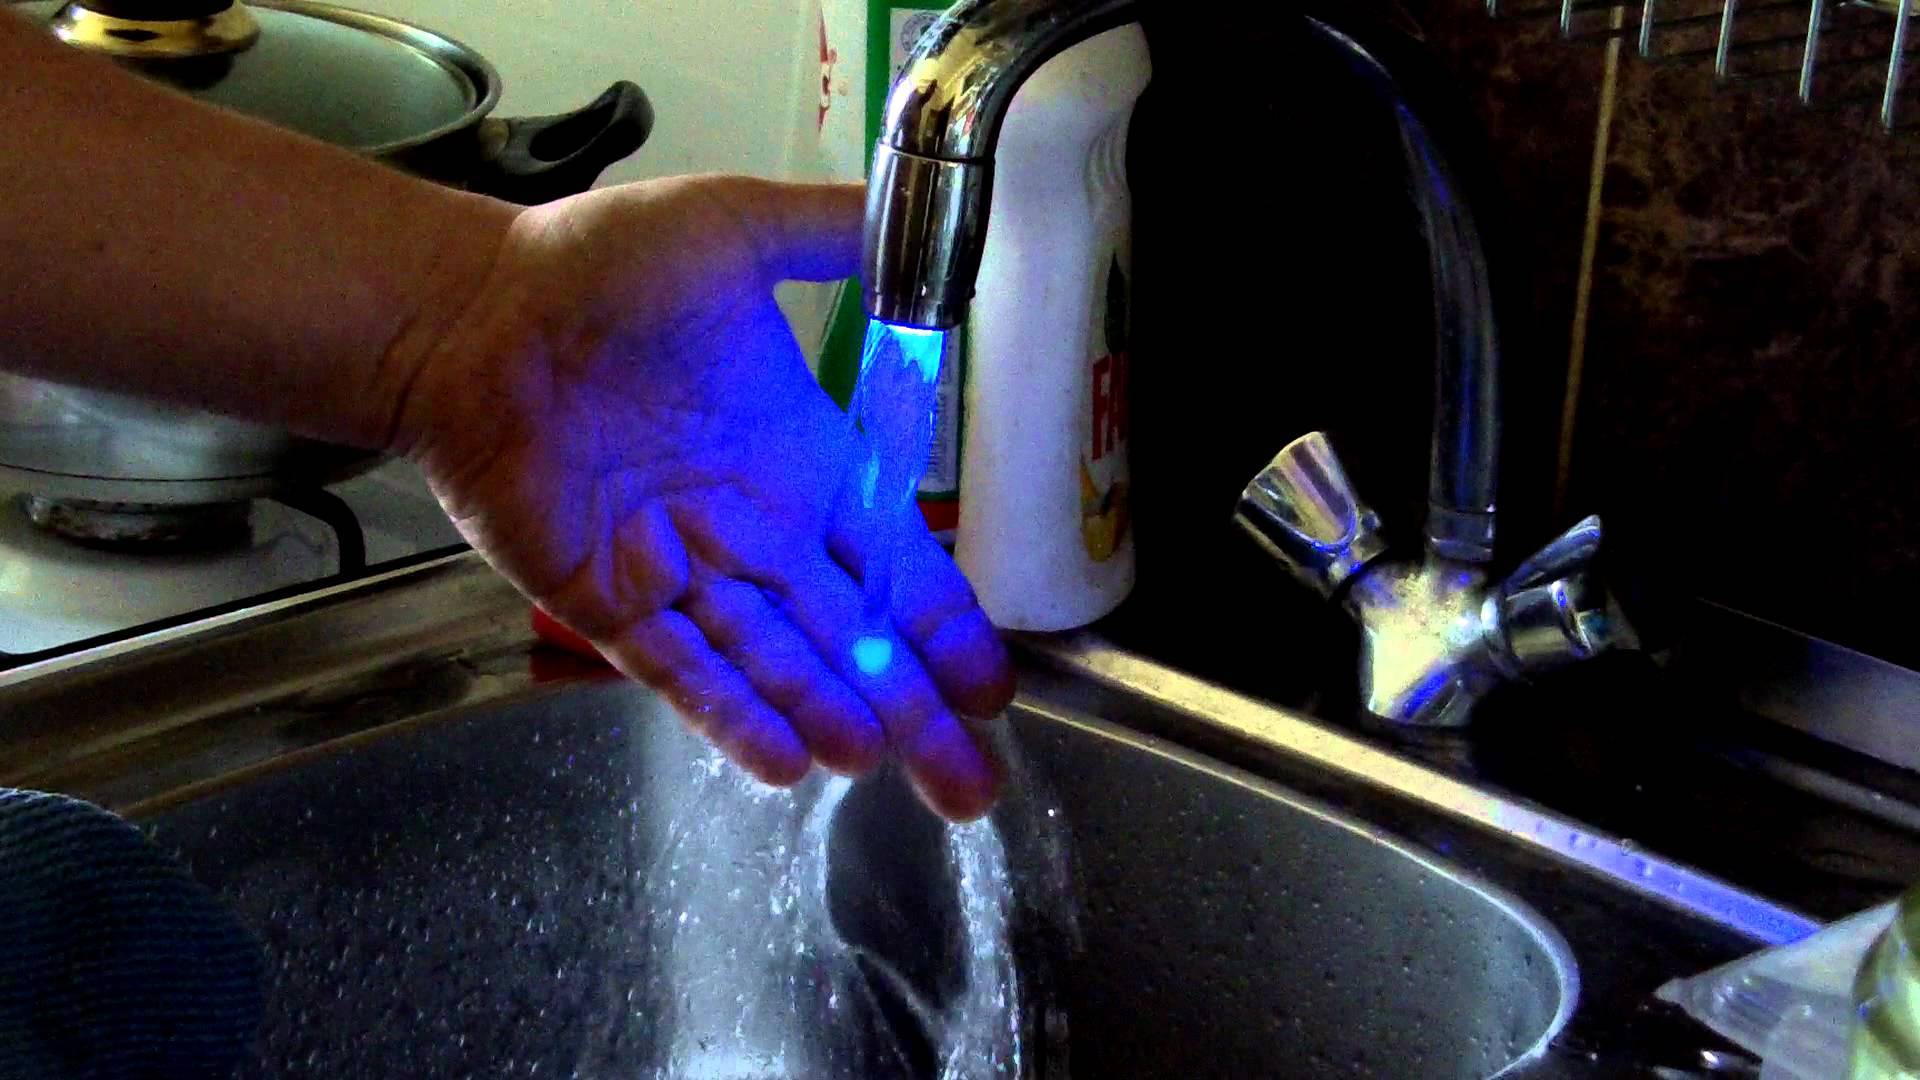 Кран с подсветкой воды. Подсветка для воды из крана. Насадка на кран с подсветкой. Подсветка воды в кране своими руками.